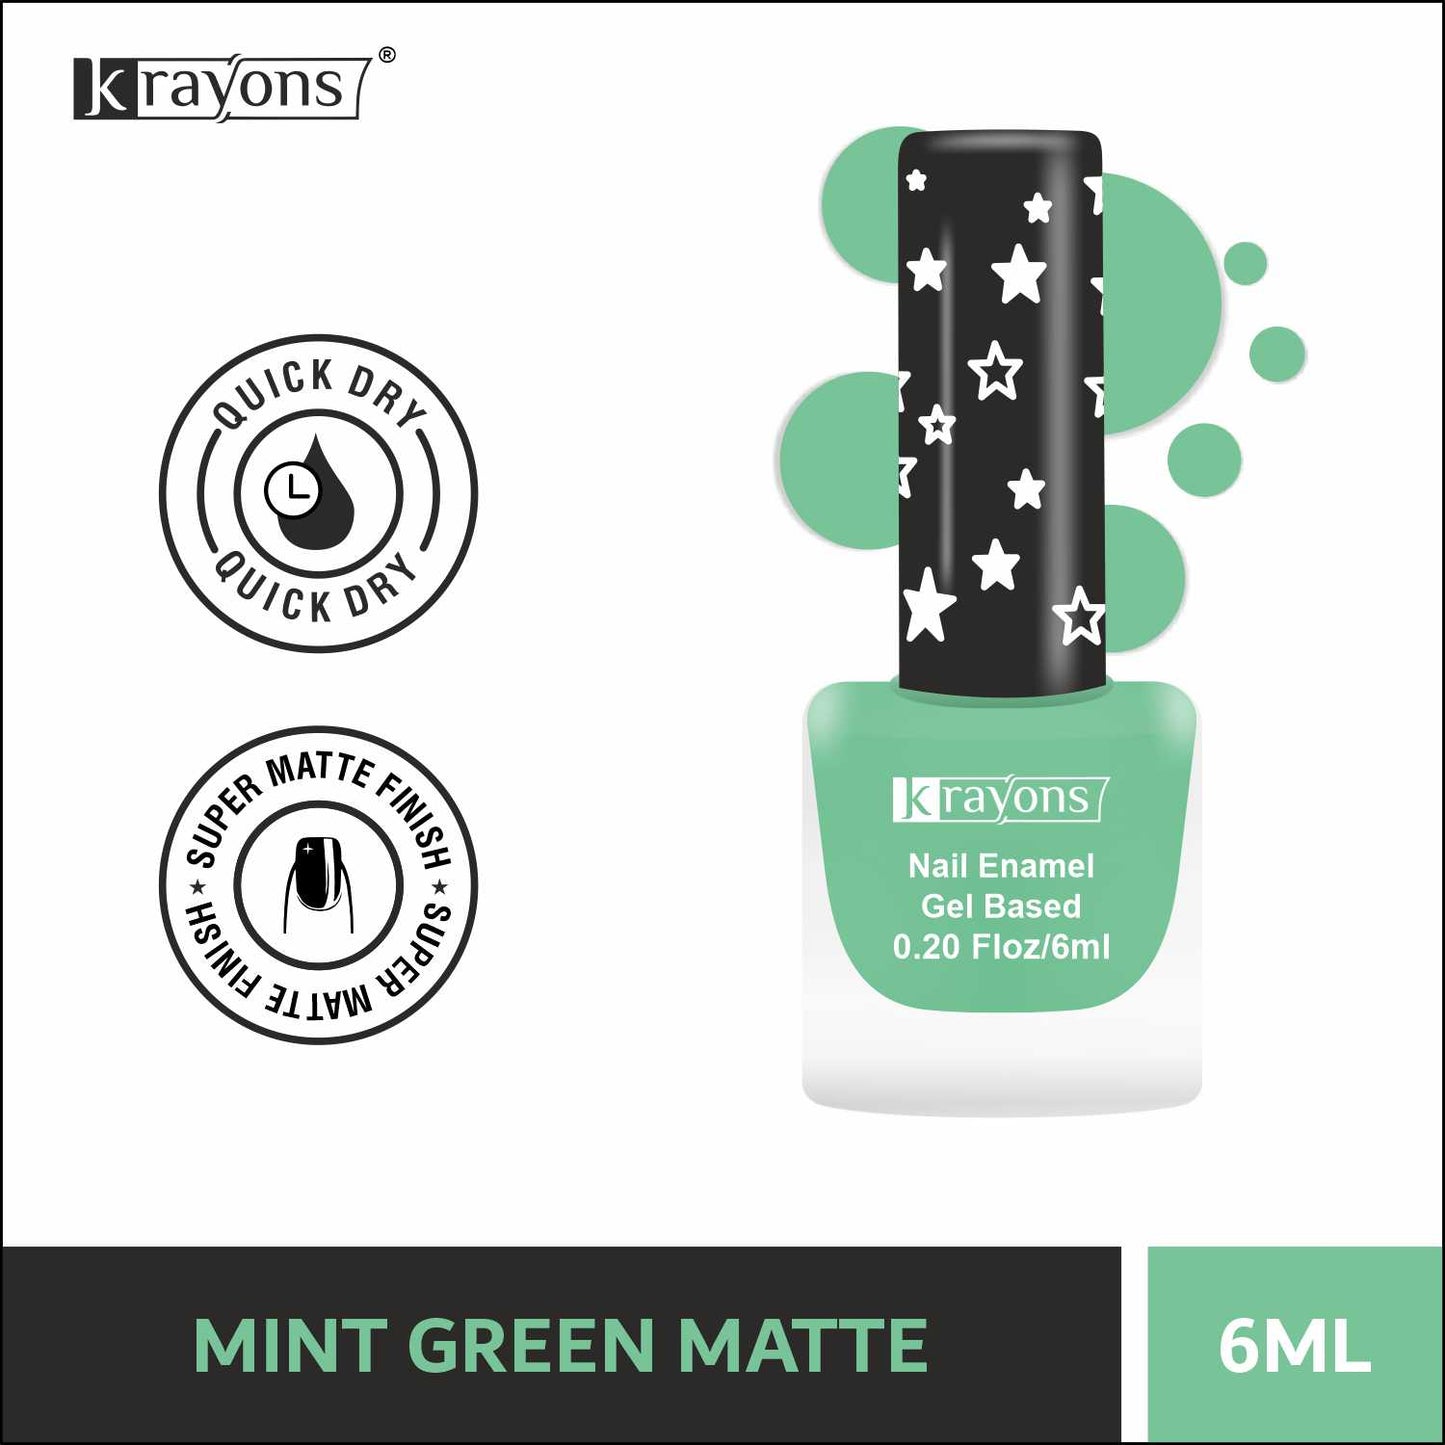 Krayons Cute Super Matte Finish Nail Enamel, Quick Dry, Smooth Finish, LongLasting, Mint Green, 6ml